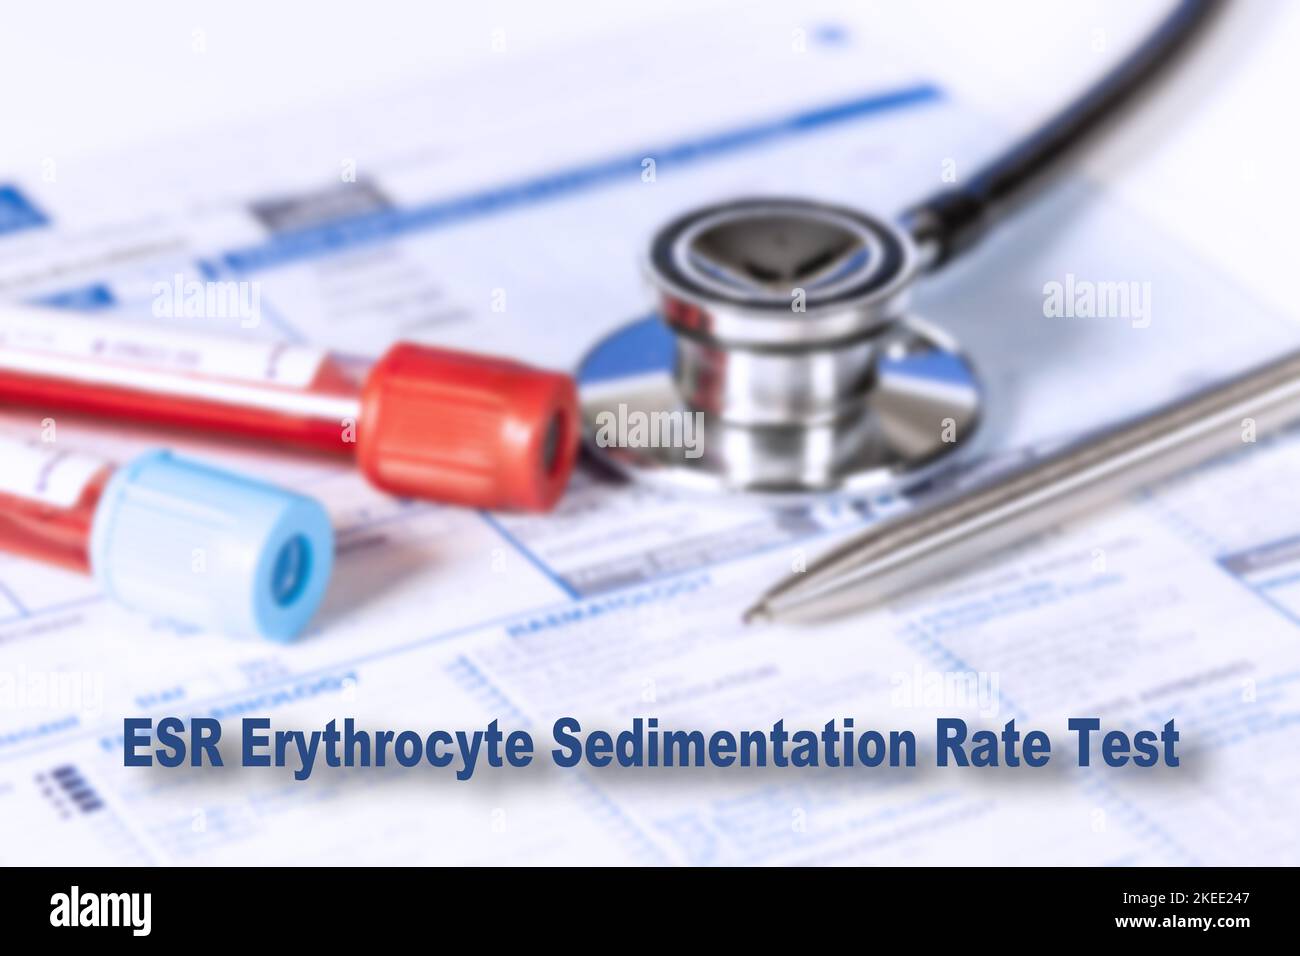 Erythrocyte sedimentation rate test, conceptual image Stock Photo